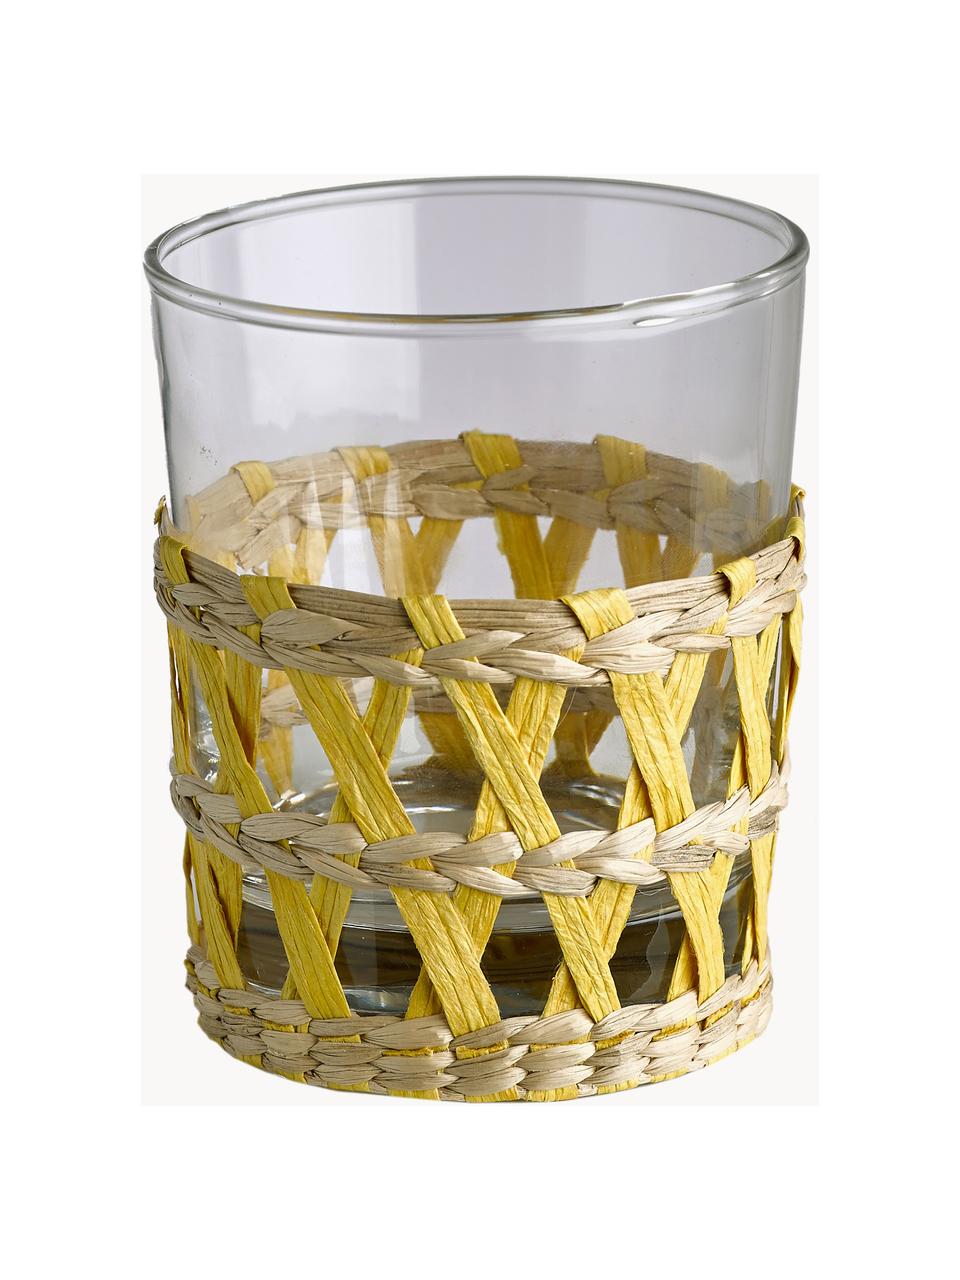 Komplet szklanek Reed, 6 elem., Transparentny, wielobarwny, Ø 8 x W 10 cm, 250 ml